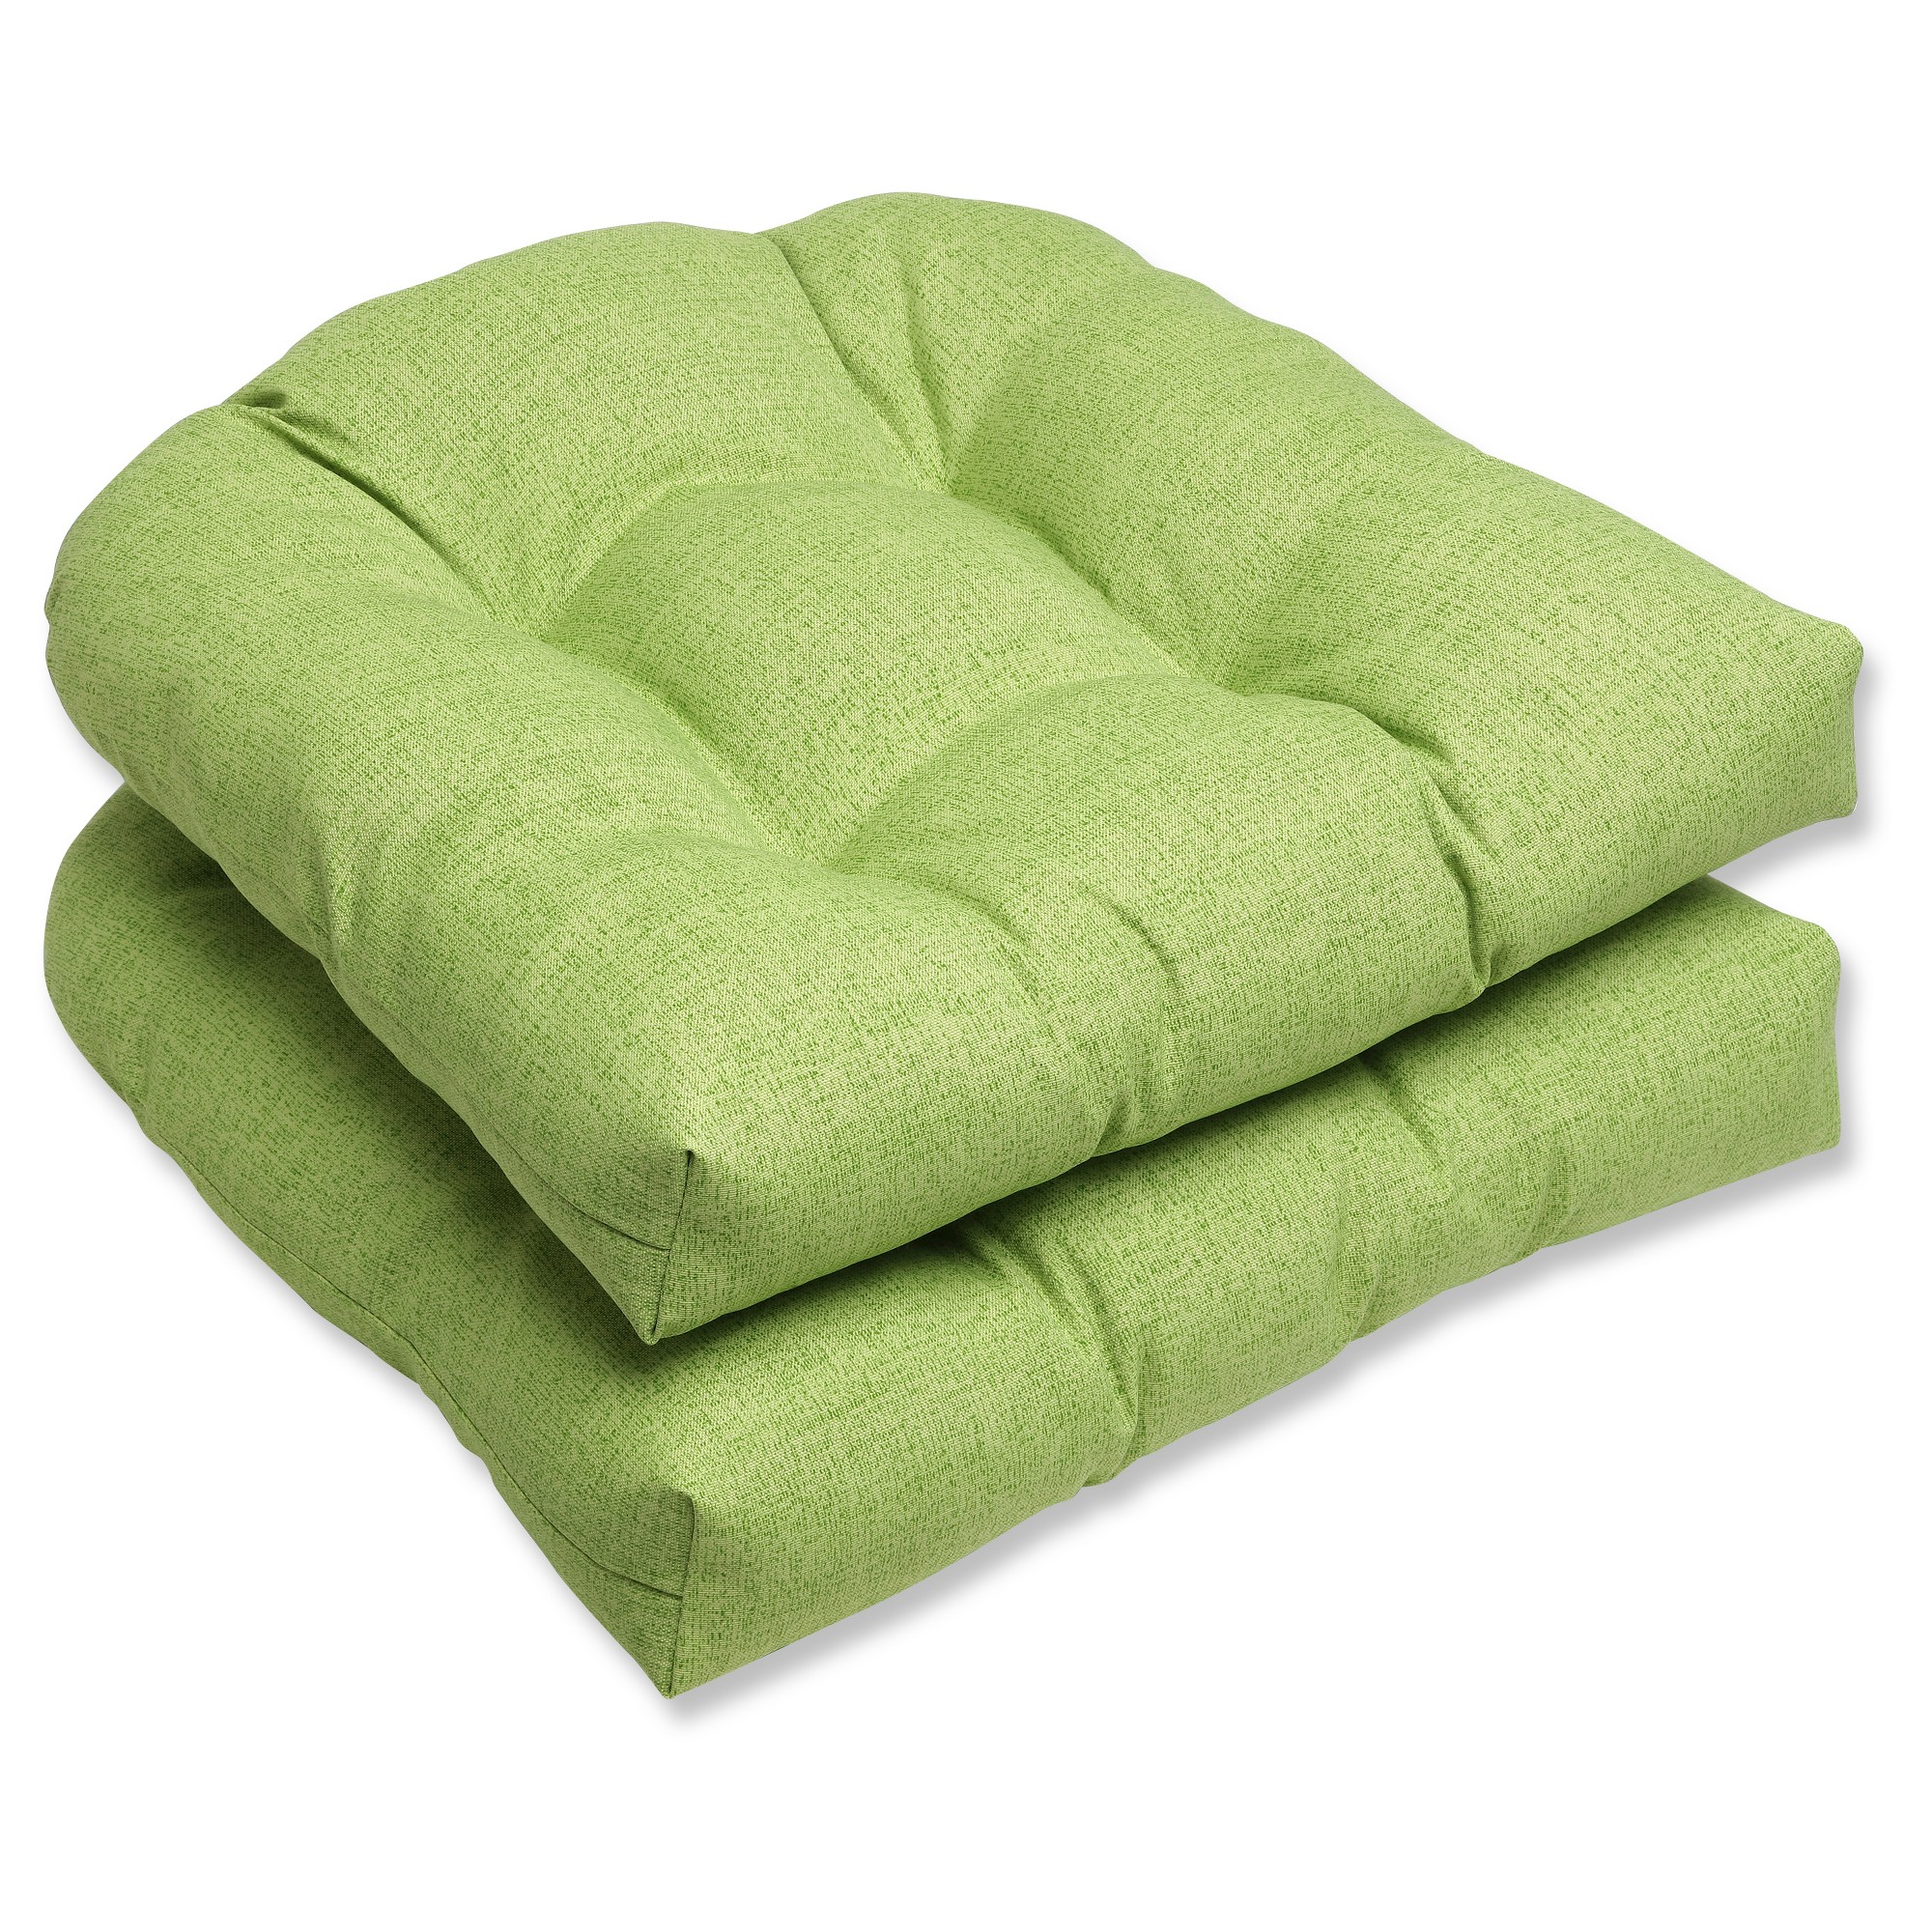 Outdoor 2-Piece Wicker Chair Cushion Set - Green